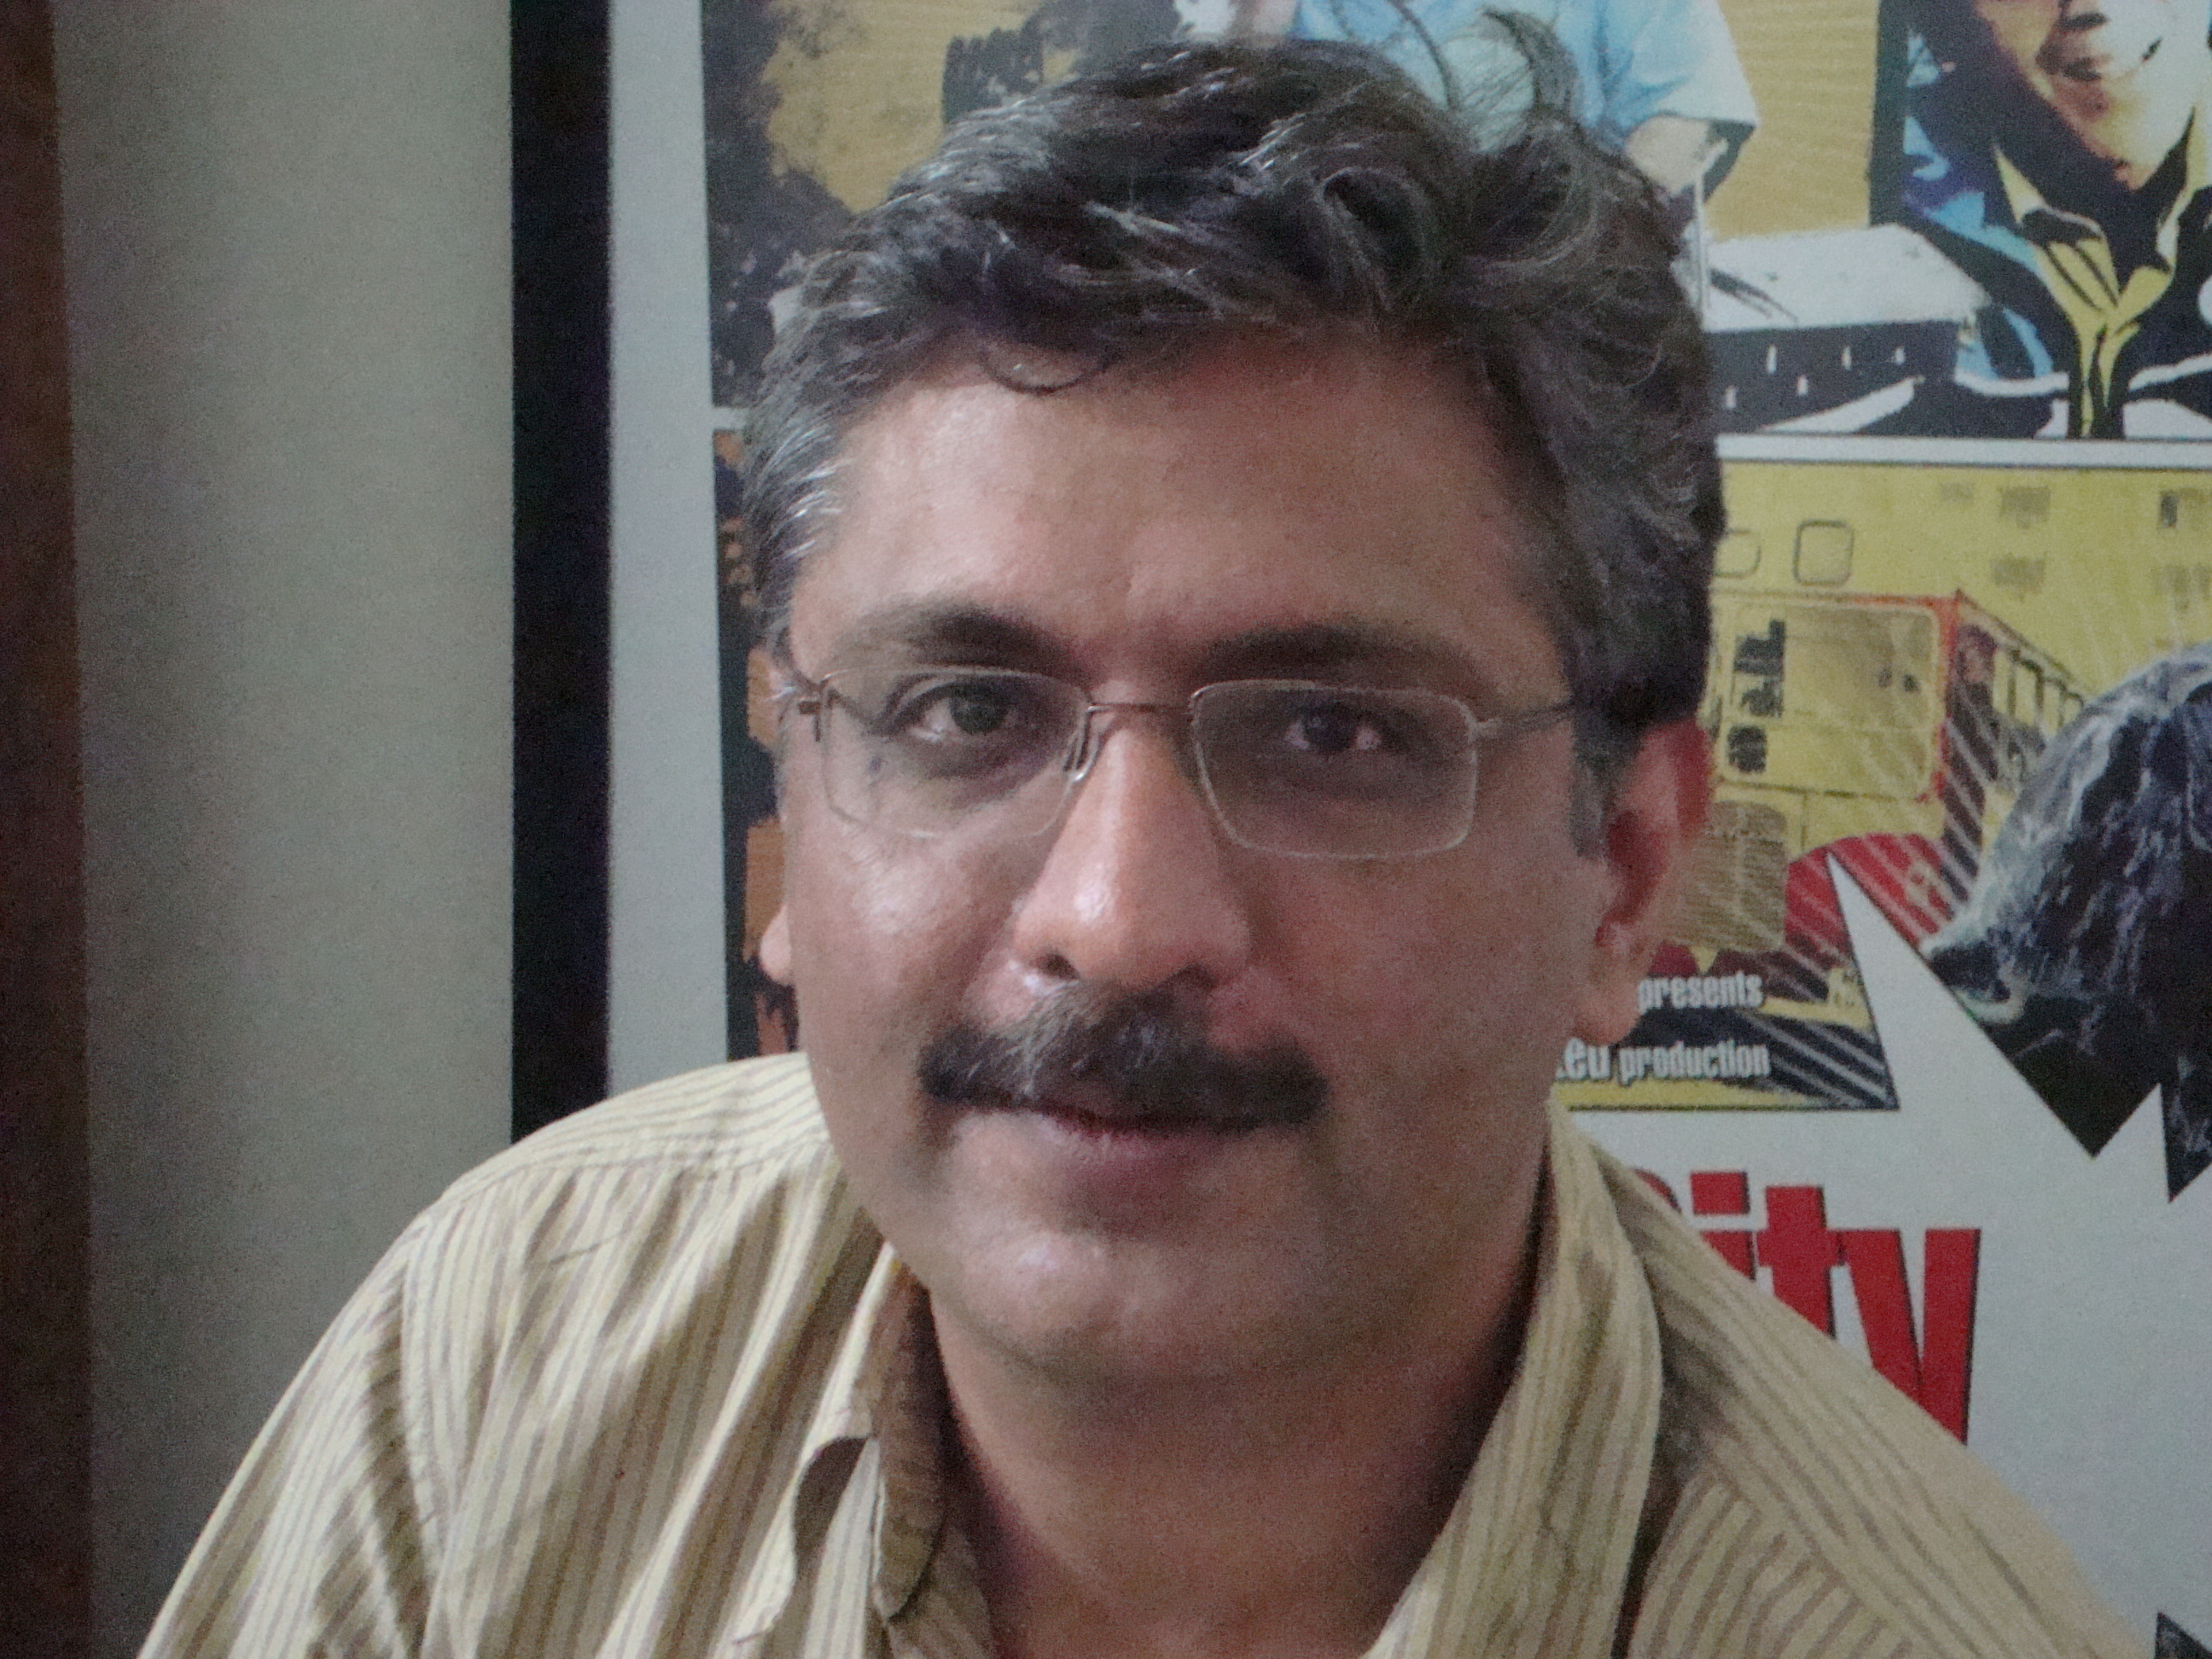 Image of Pankaj Advani from Wikidata